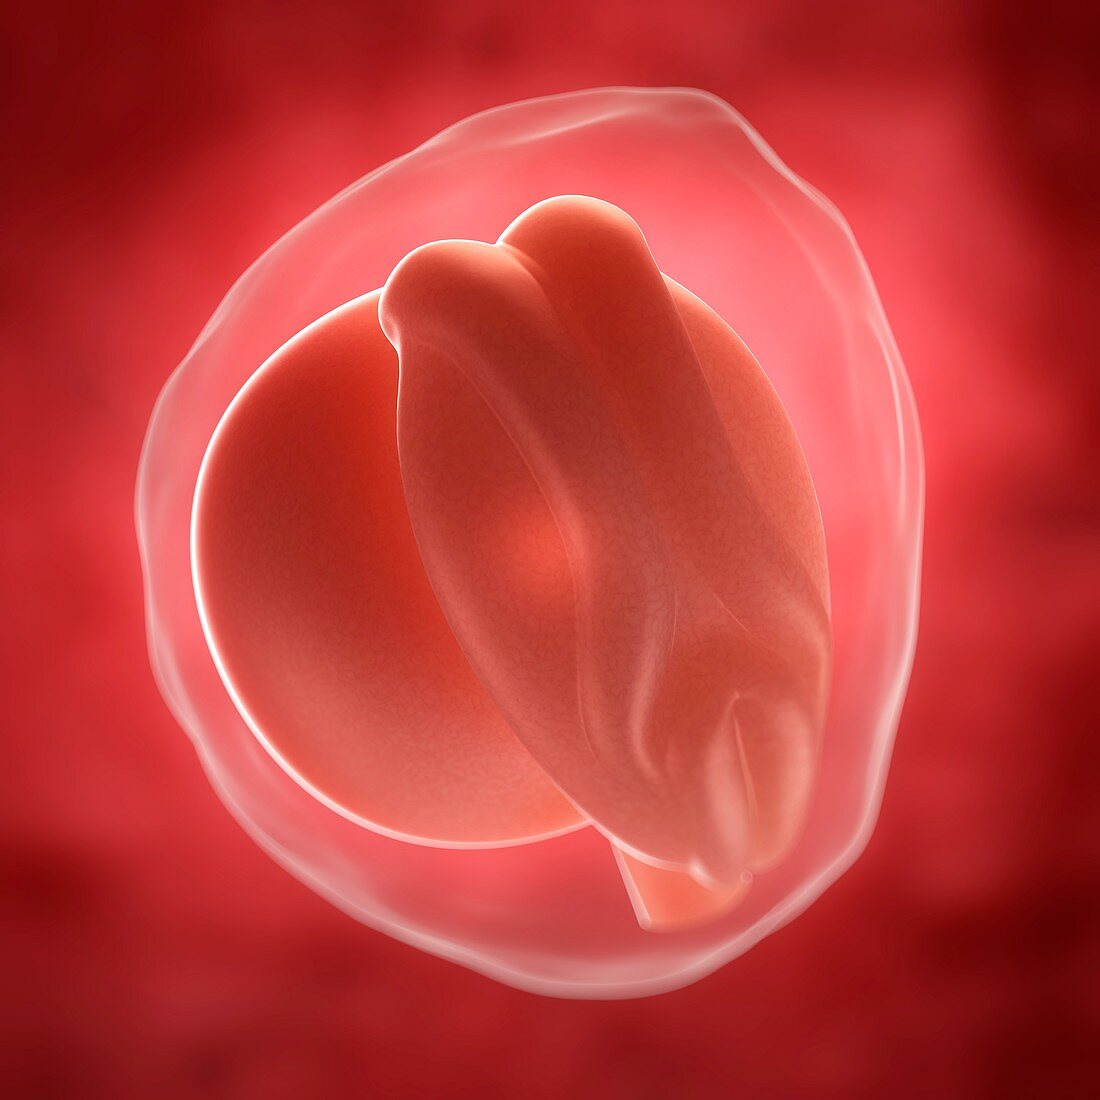 Embryo at 3 weeks,artwork